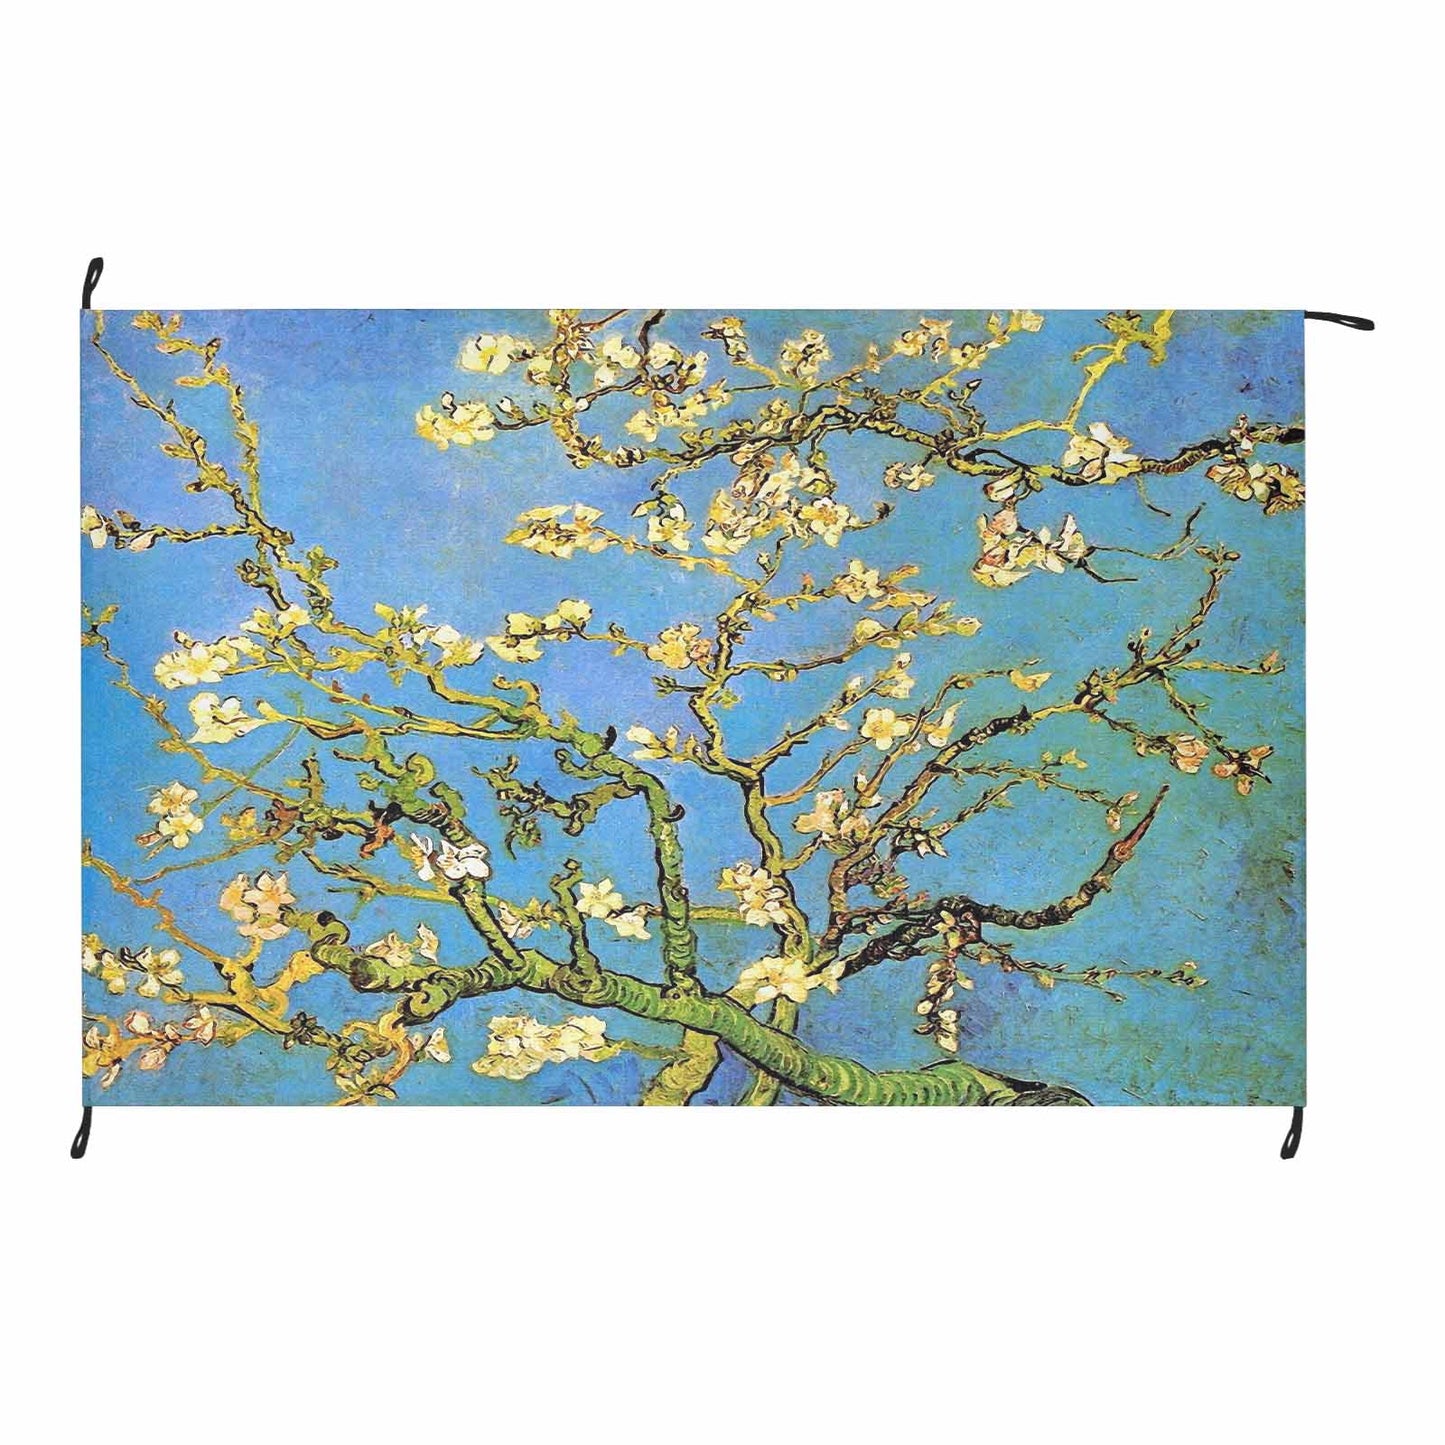 Vintage Floral waterproof picnic mat, 81 x 55in, Design 20